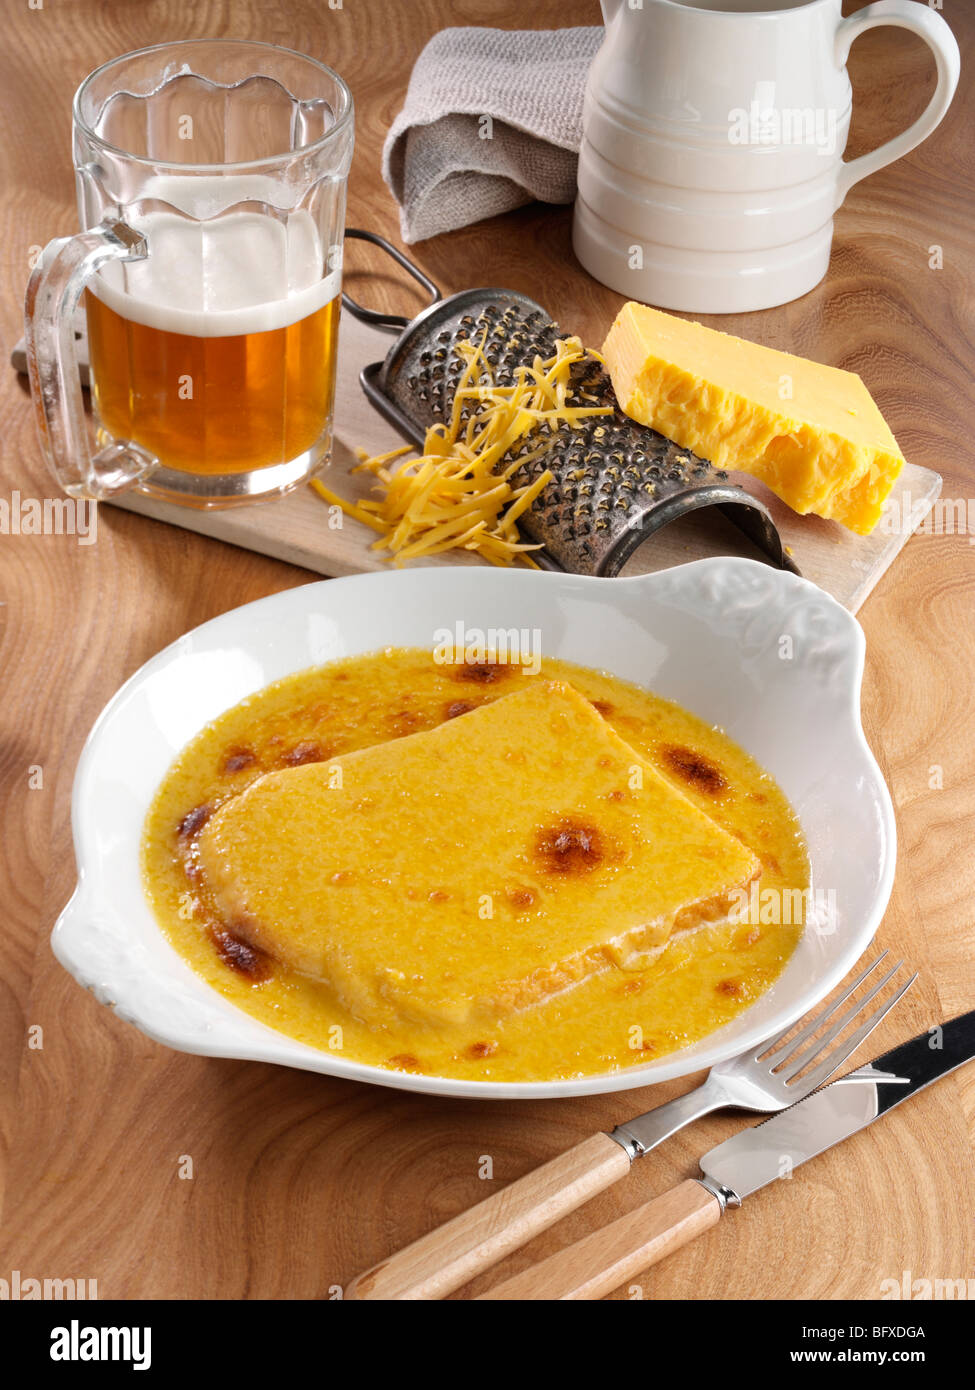 A dish of cheese rarebit Stock Photo